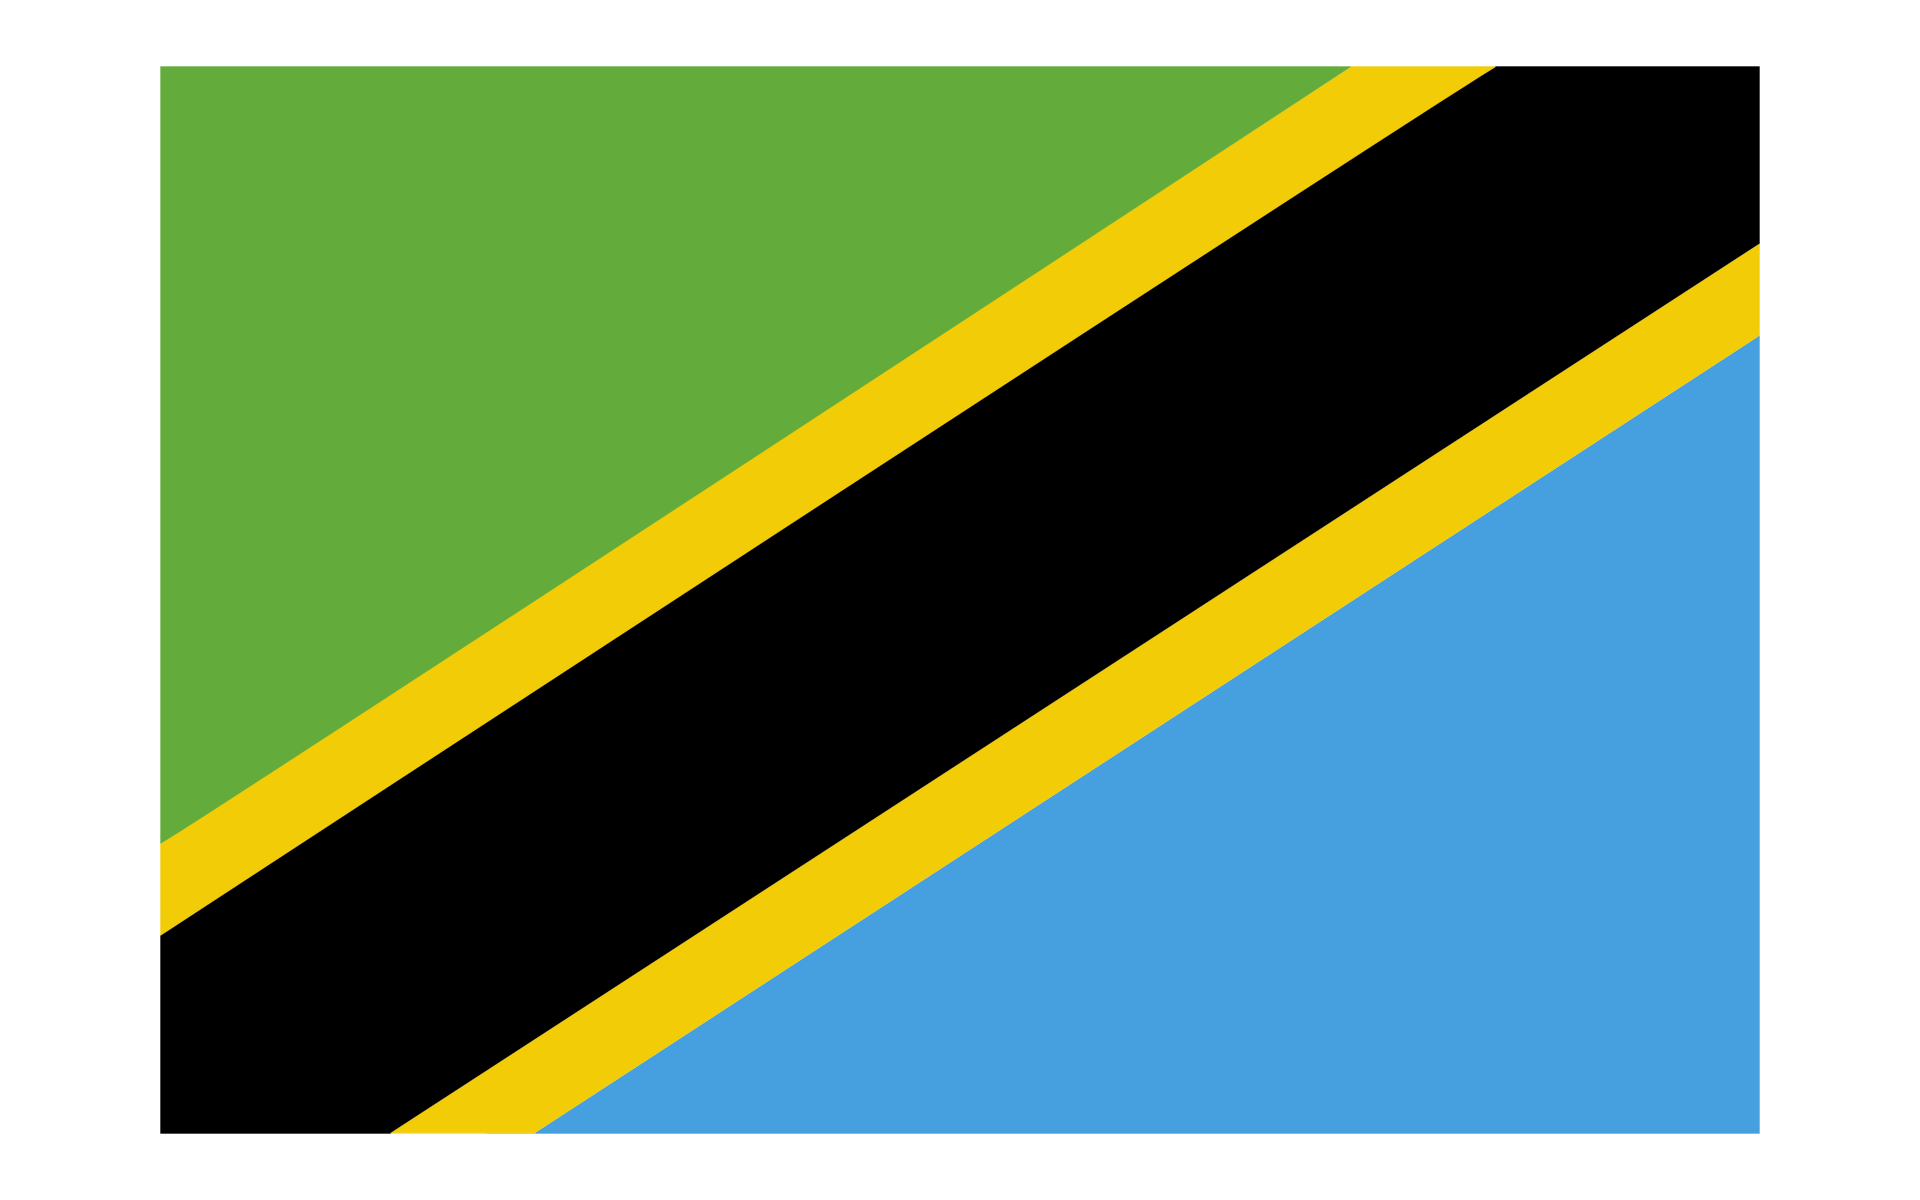 Tanzania Flag Png Clipart